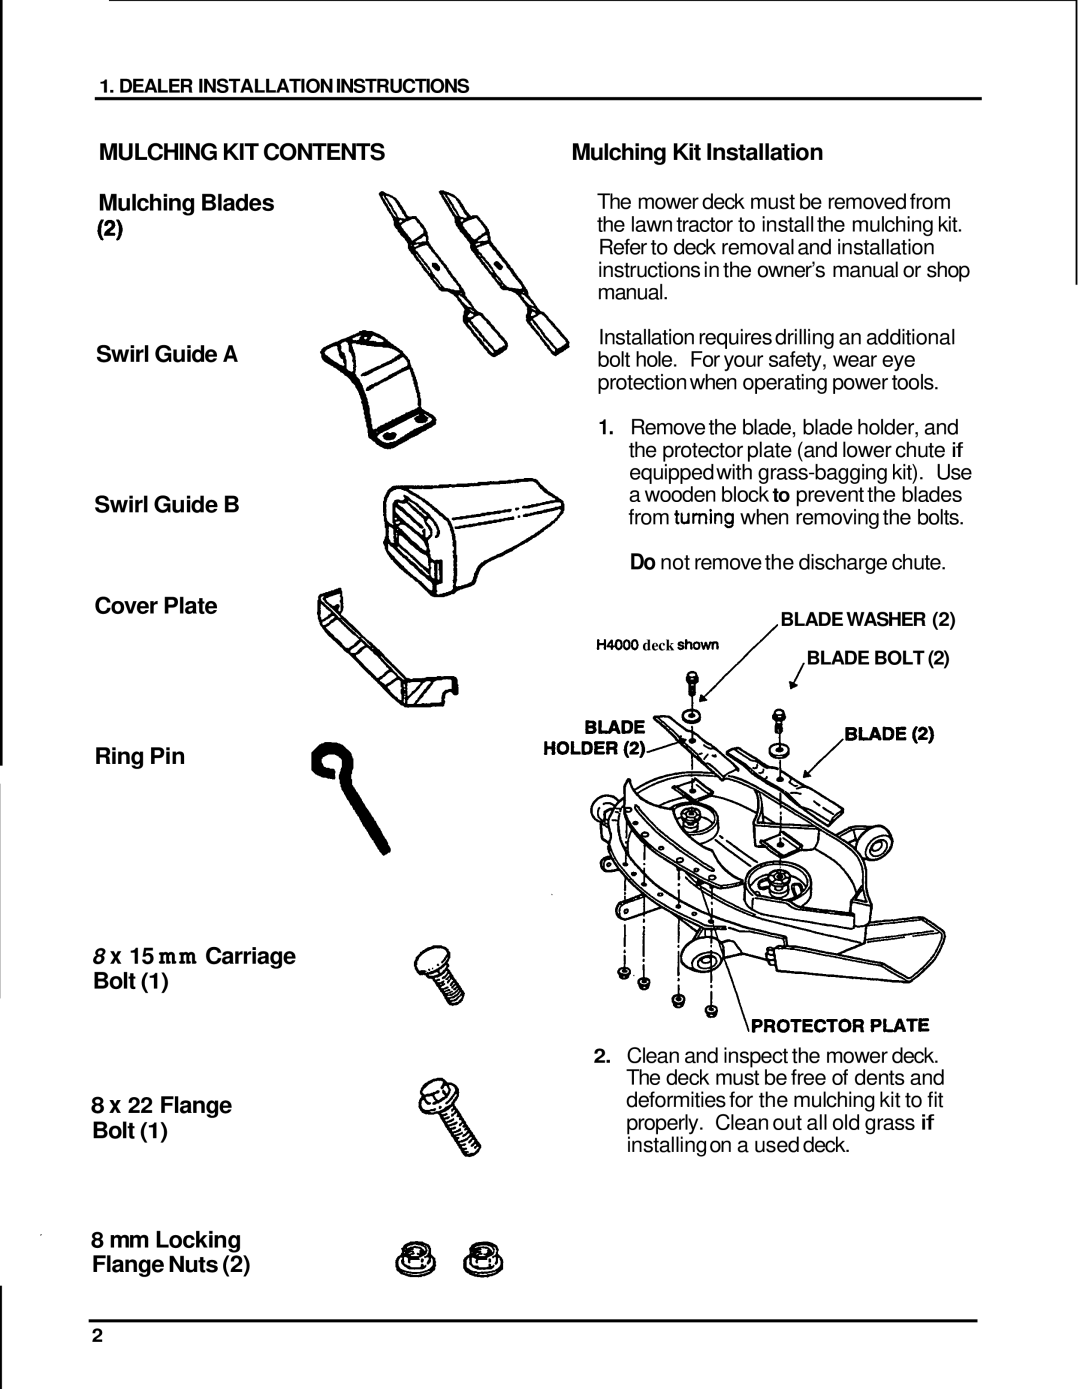 Honda Power Equipment H2000 manual MULCHING KIT CONTENTS Mulching Blades, Swirl Guide A Swirl Guide B Cover Plate Ring Pin1 